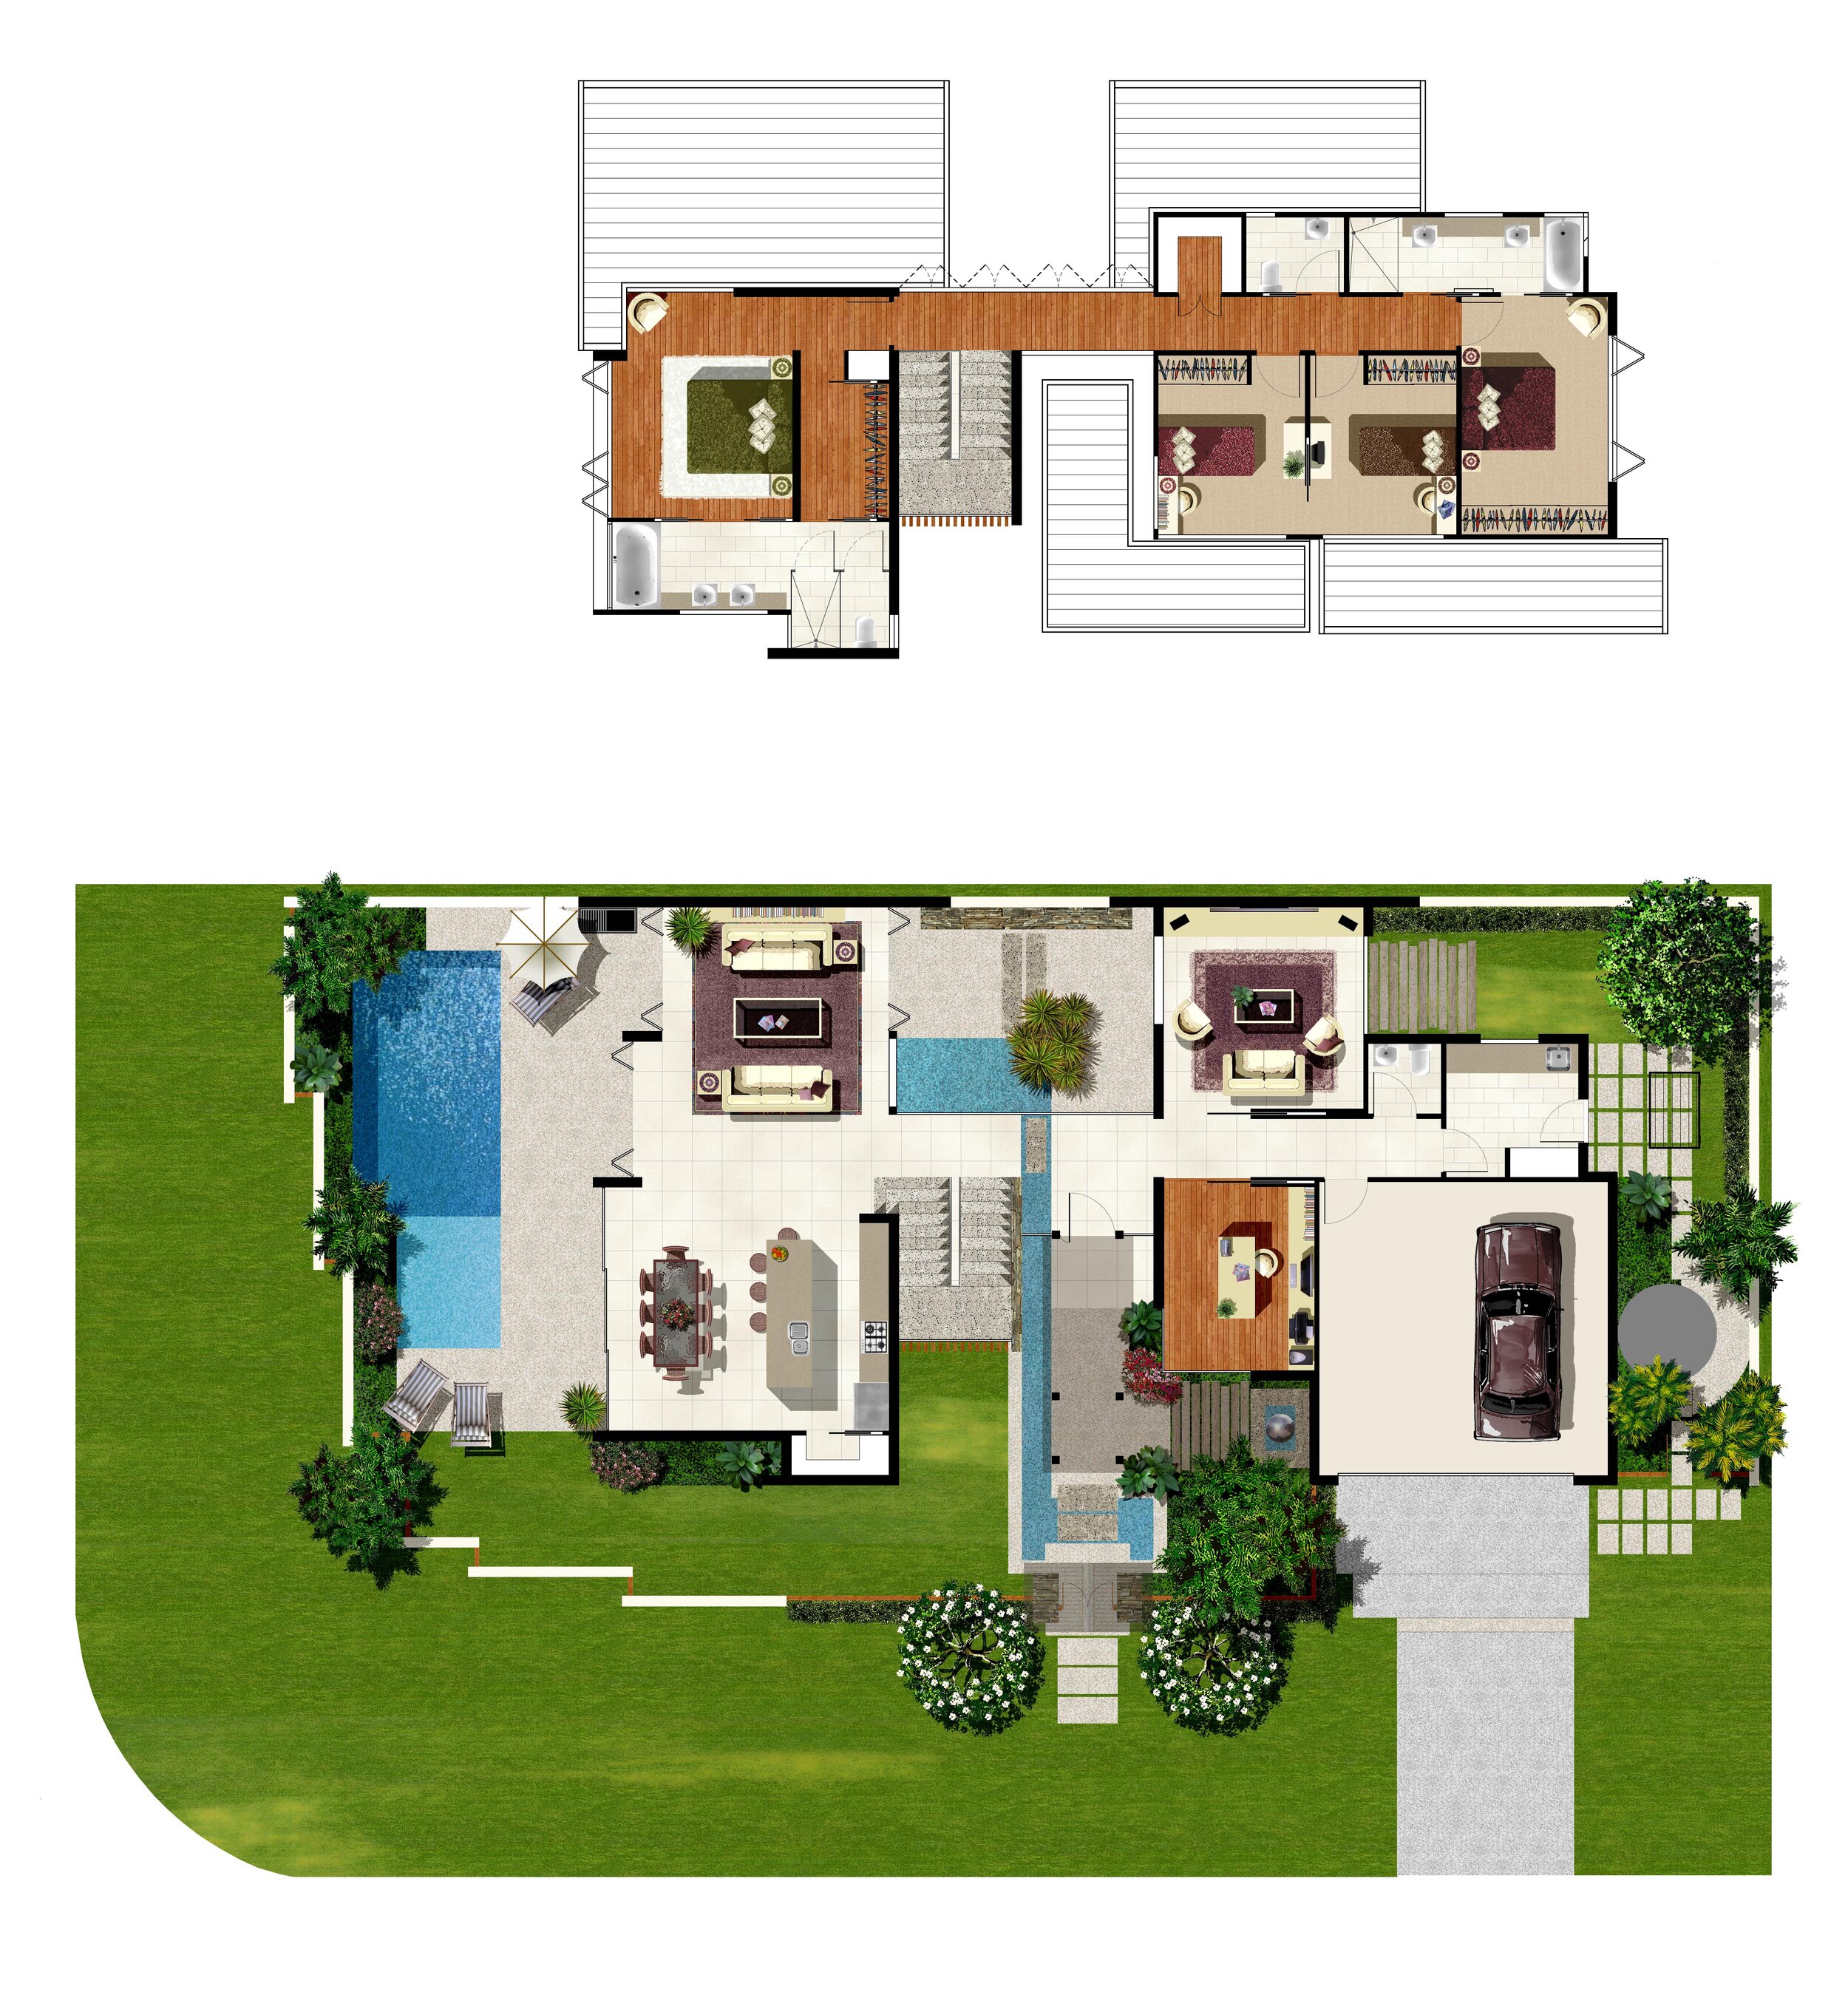 HOUSES_plan_0.jpg